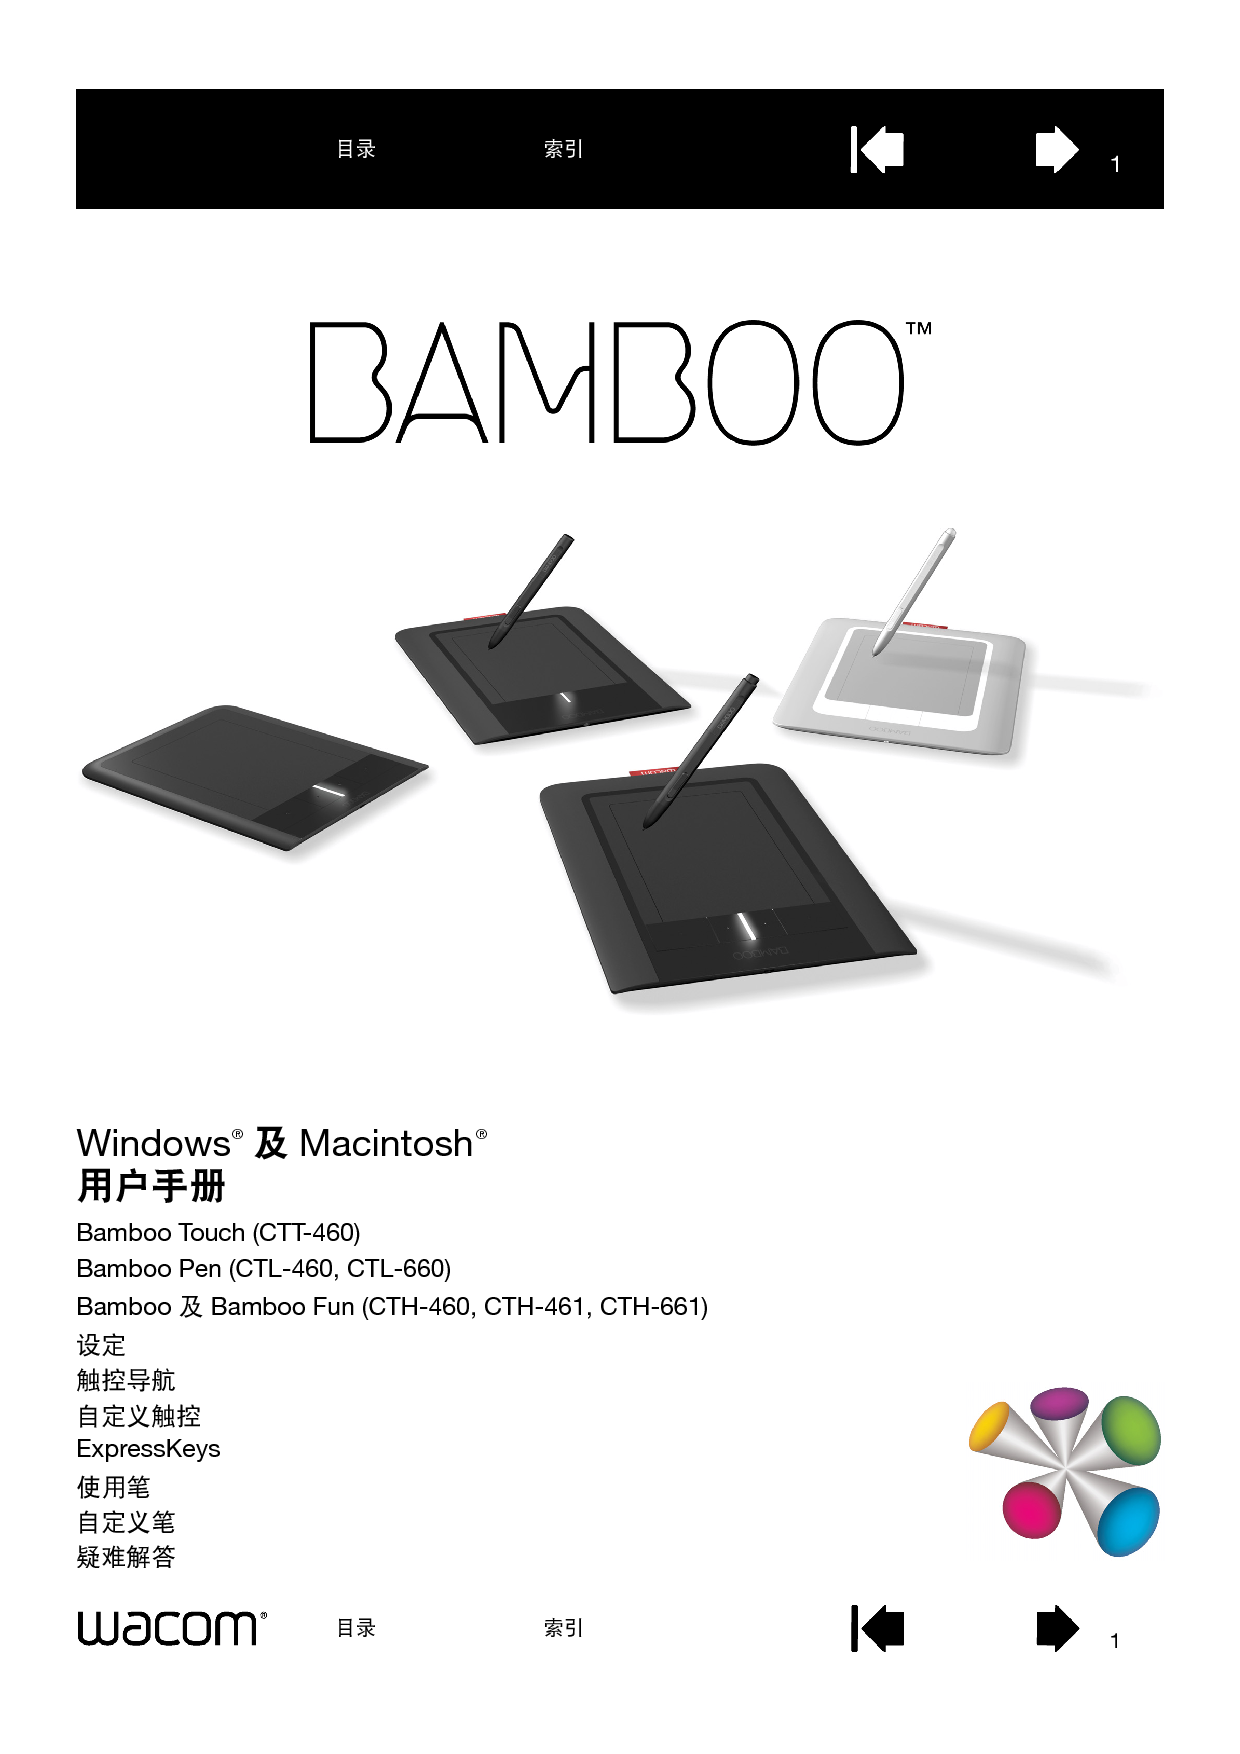 和冠 Wacom BAMBOO Touch, Bamboo, CTH-460 用户手册 封面